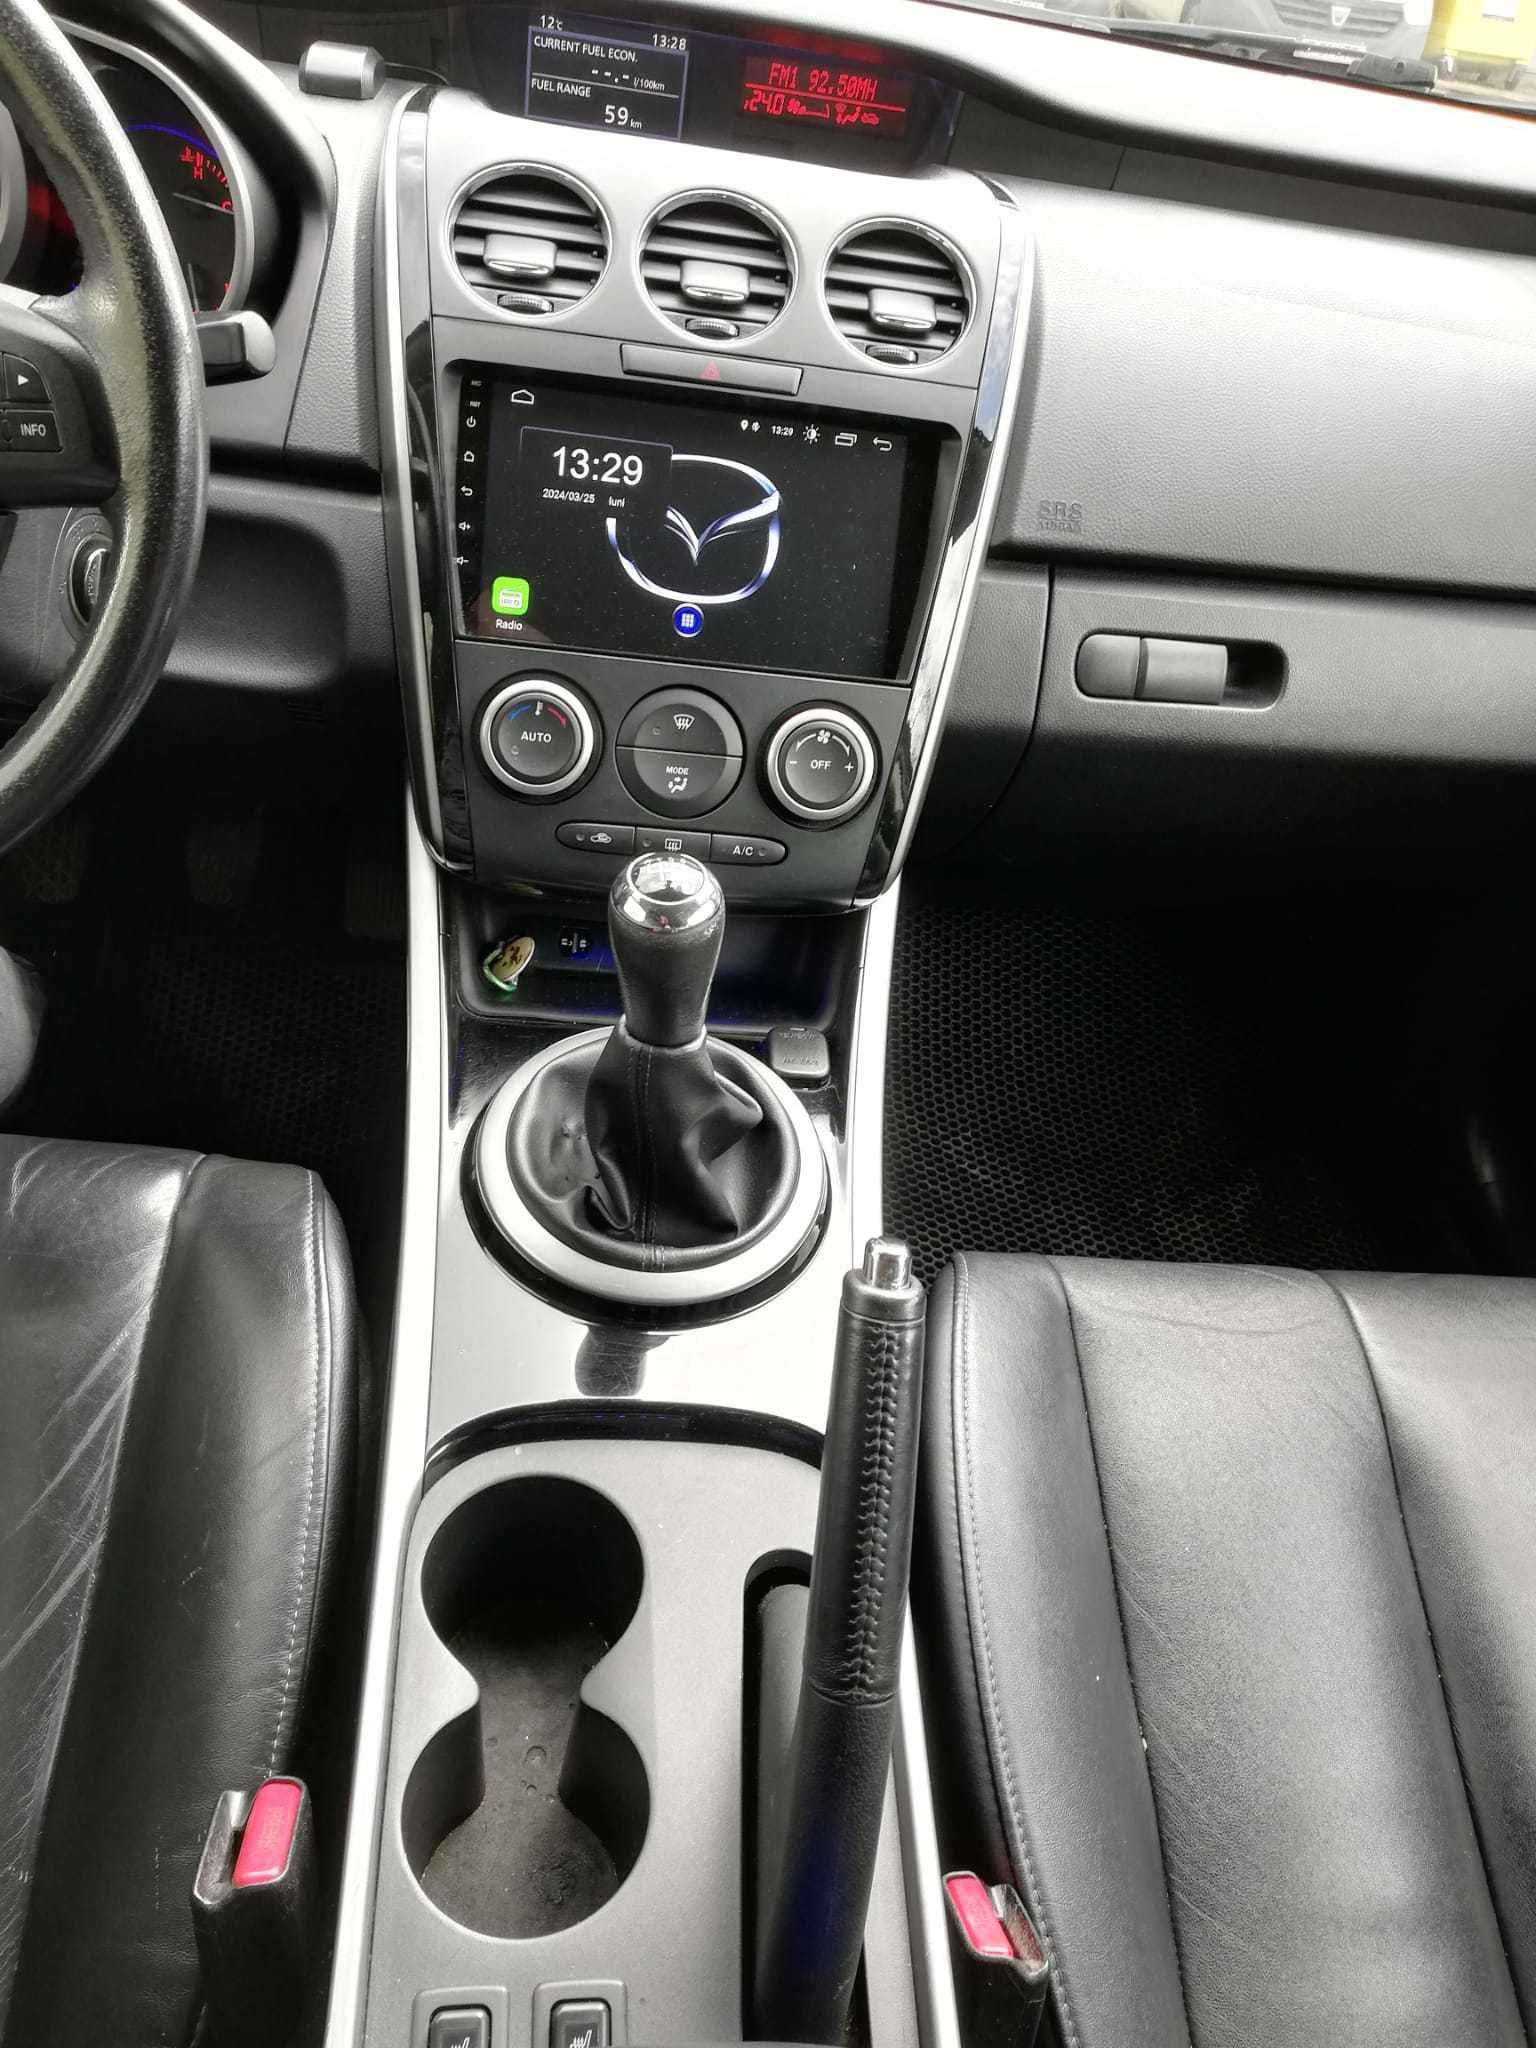 Mazda CX 7, an 2011, 2.3 benzina 260 Cp, euro 5